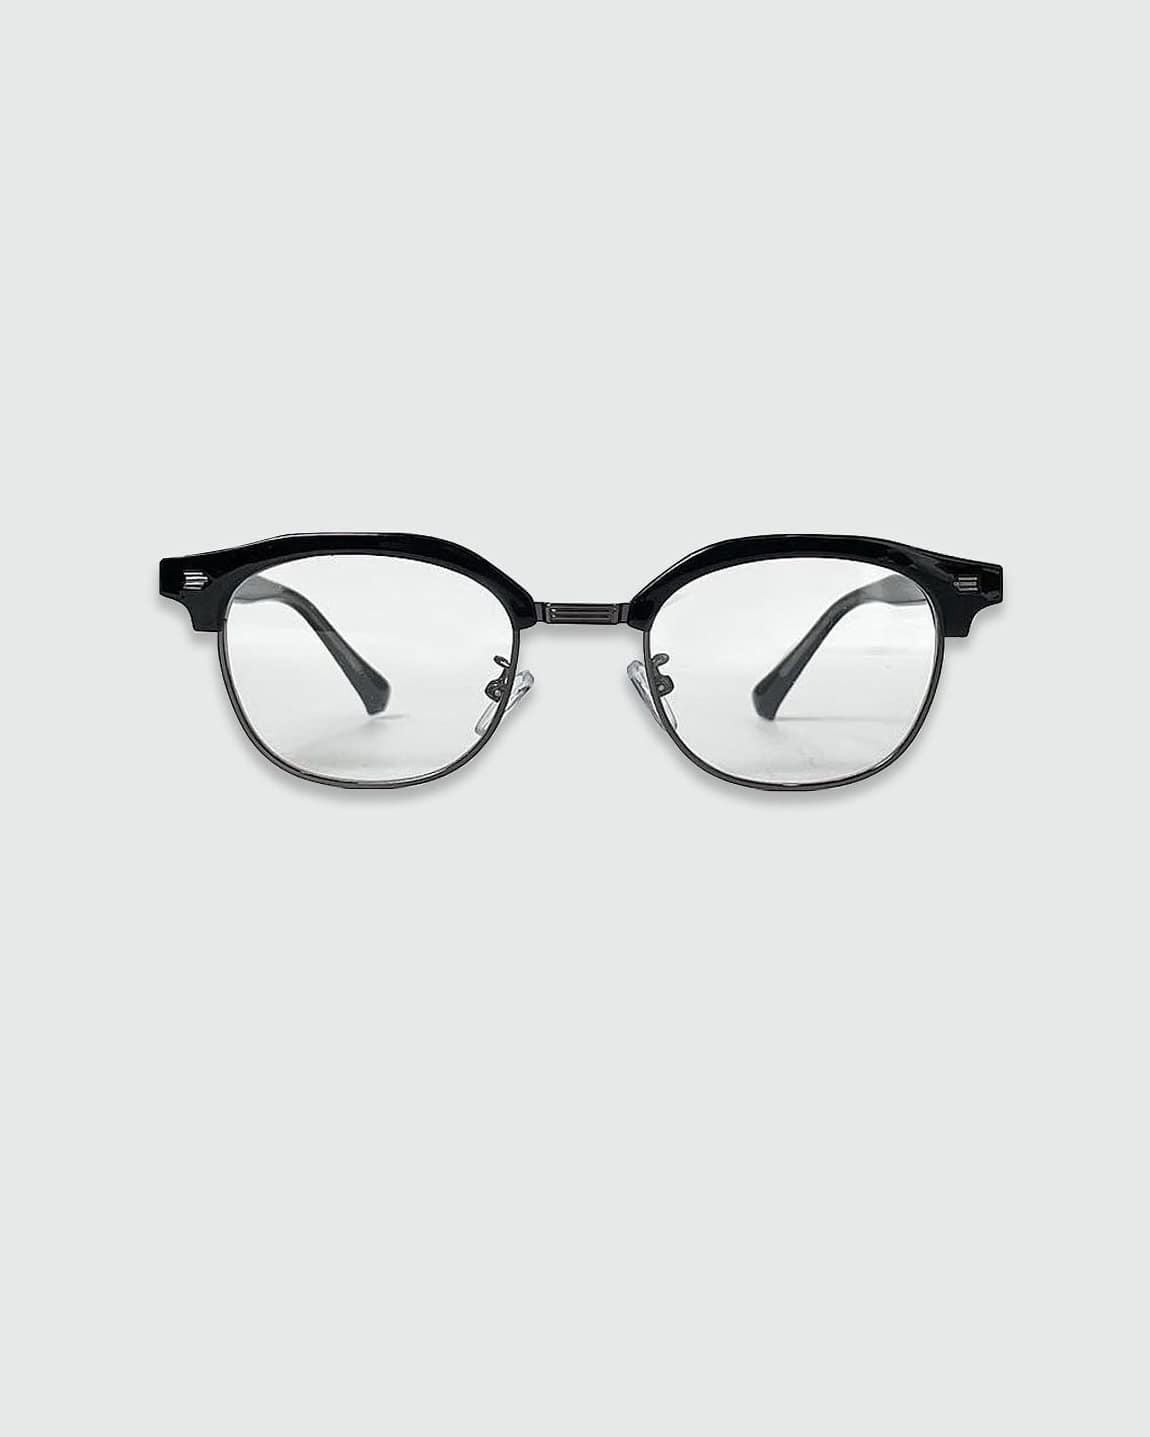 Ry half frame glasses